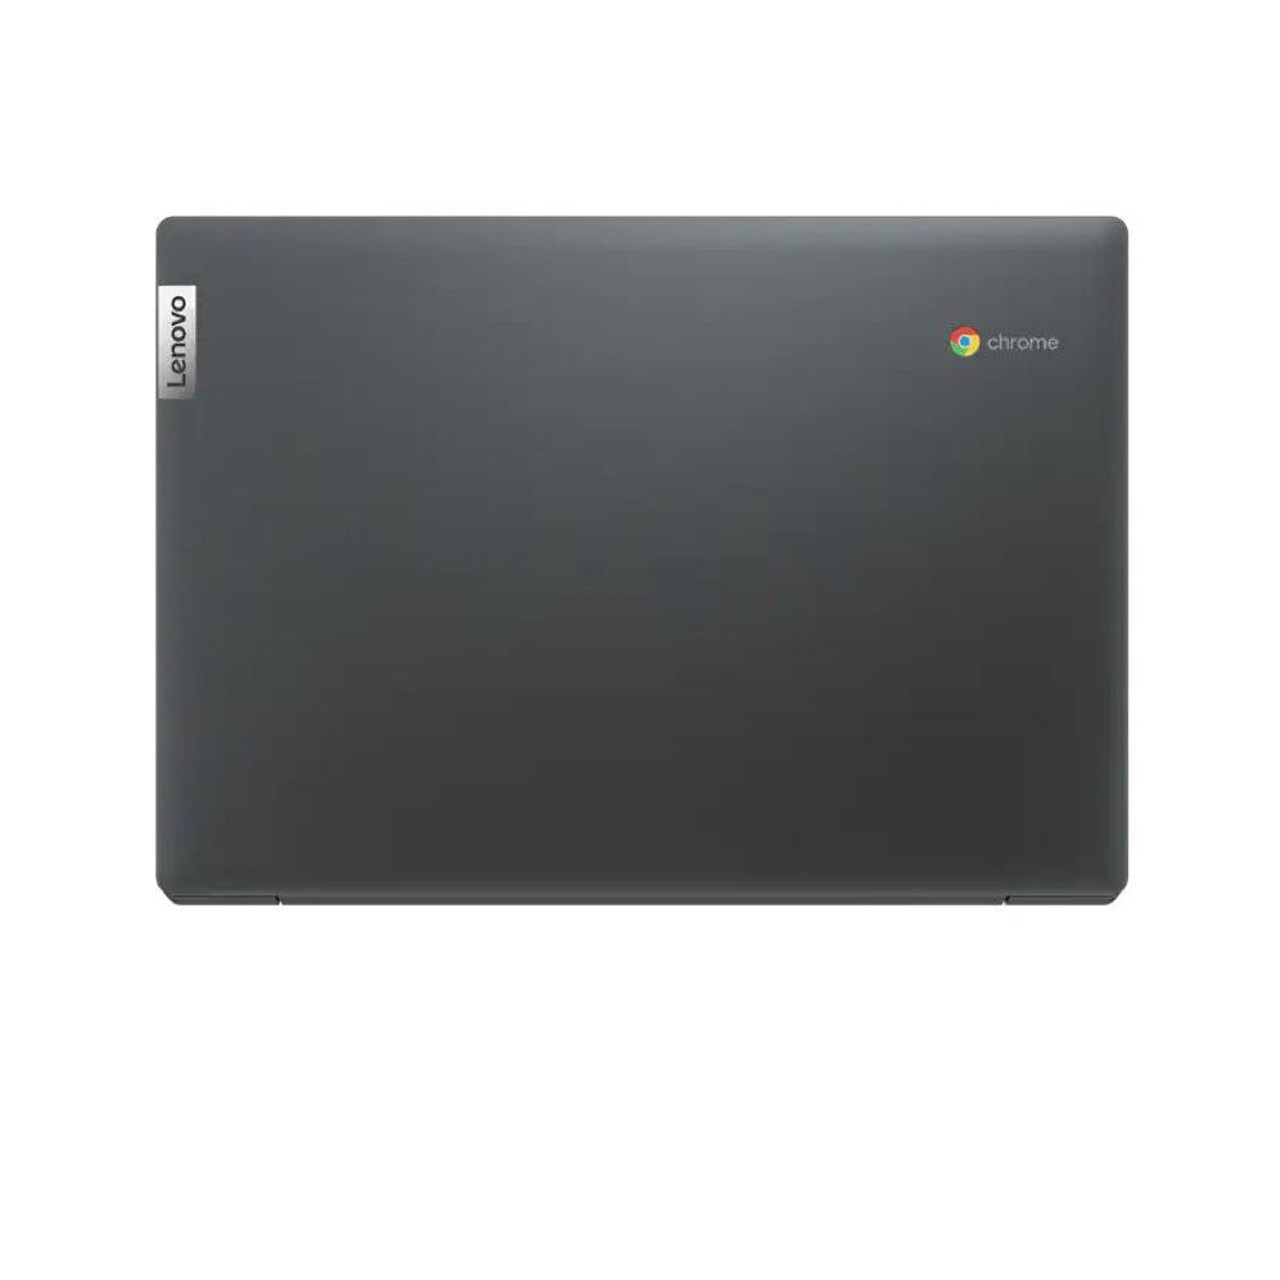 Lenovo IdeaPad 3i 14" Laptop Intel Celeron N4020 4GB 64GB eMMC Chrome OS | 82C1002AUS | Manufacturer Refurbished